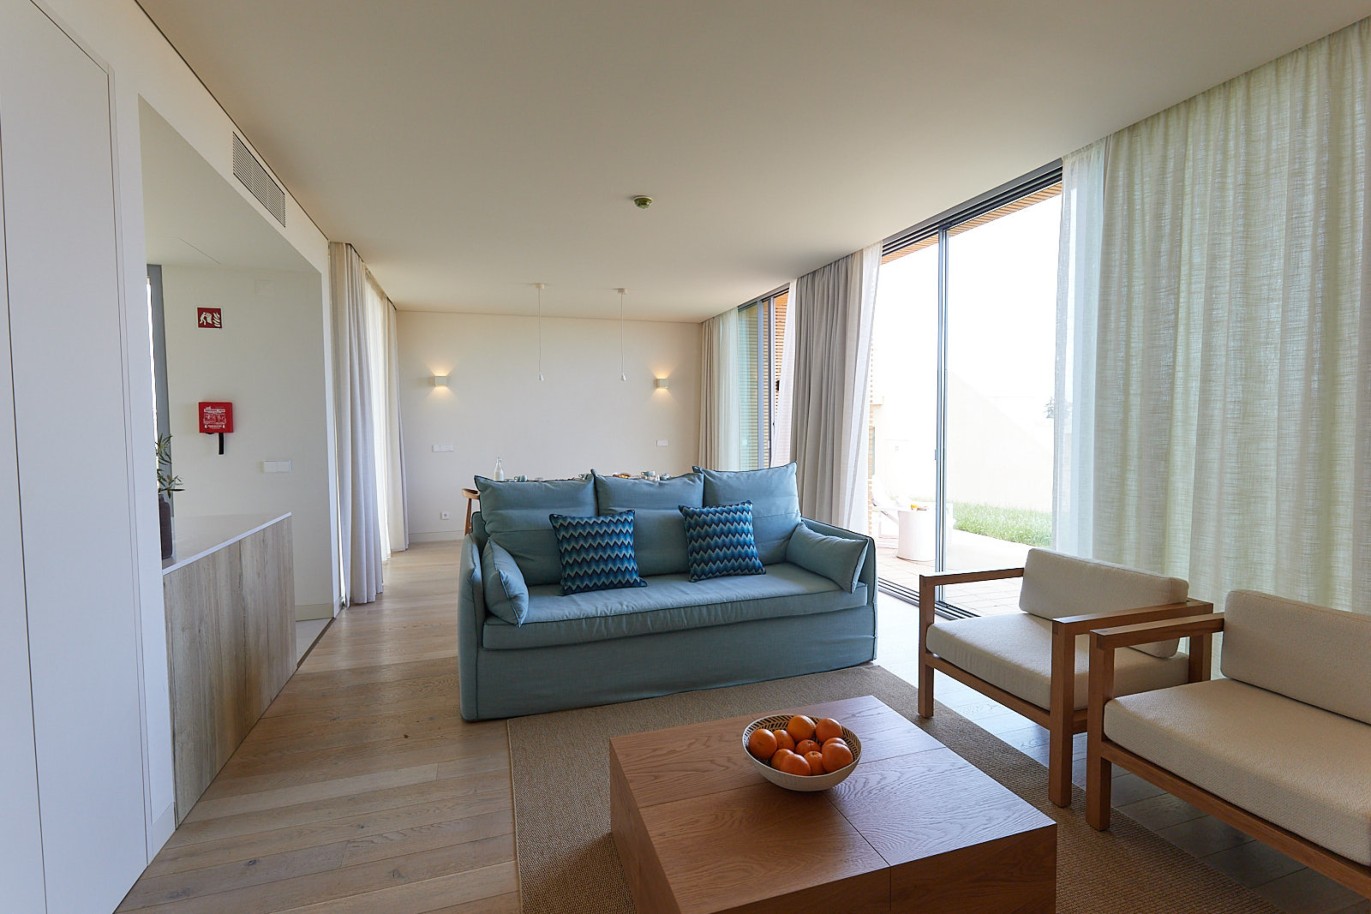 2 bedroom apartment in resort, for sale in Porches, Algarve_229254